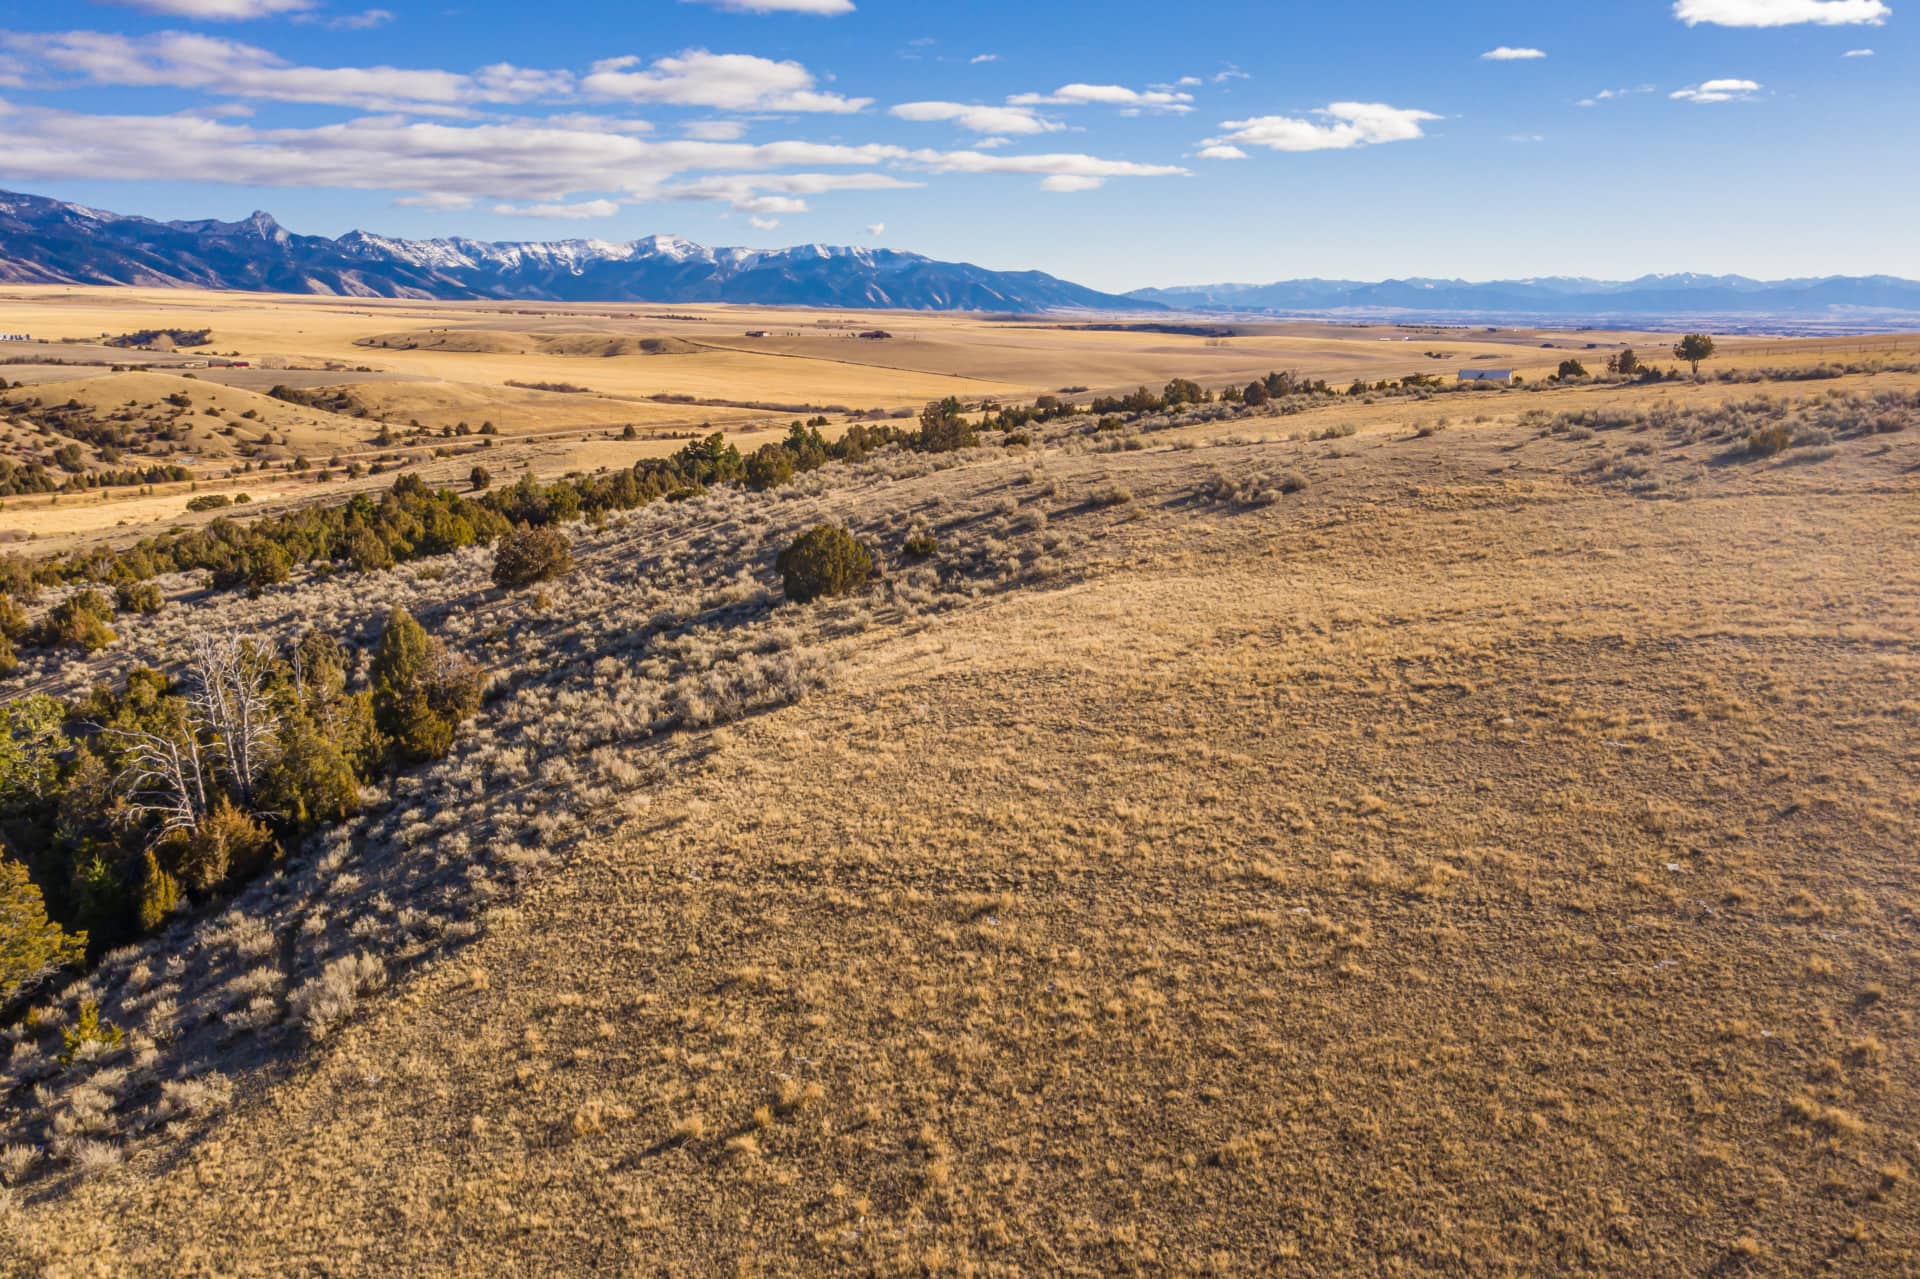 bozeman montana overlook at the sxs ranch